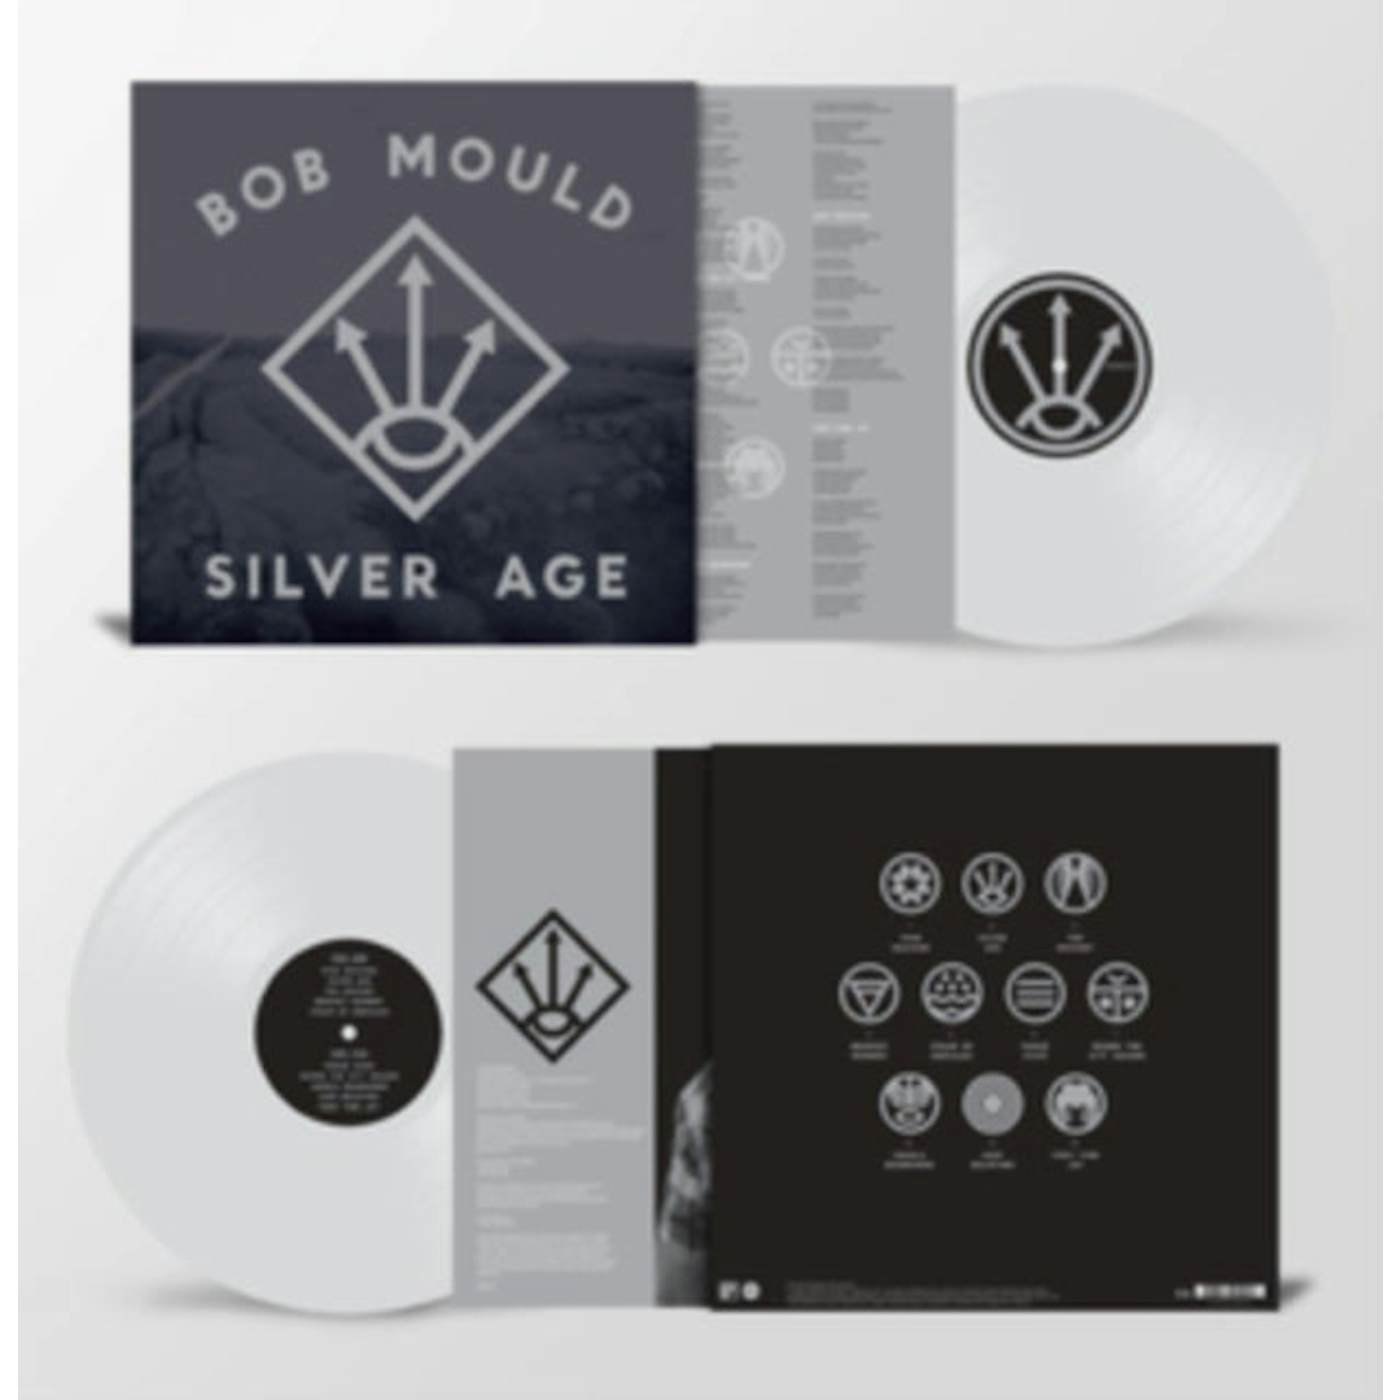 Bob Mould LP Vinyl Record - Silver Age (Silver Vinyl)